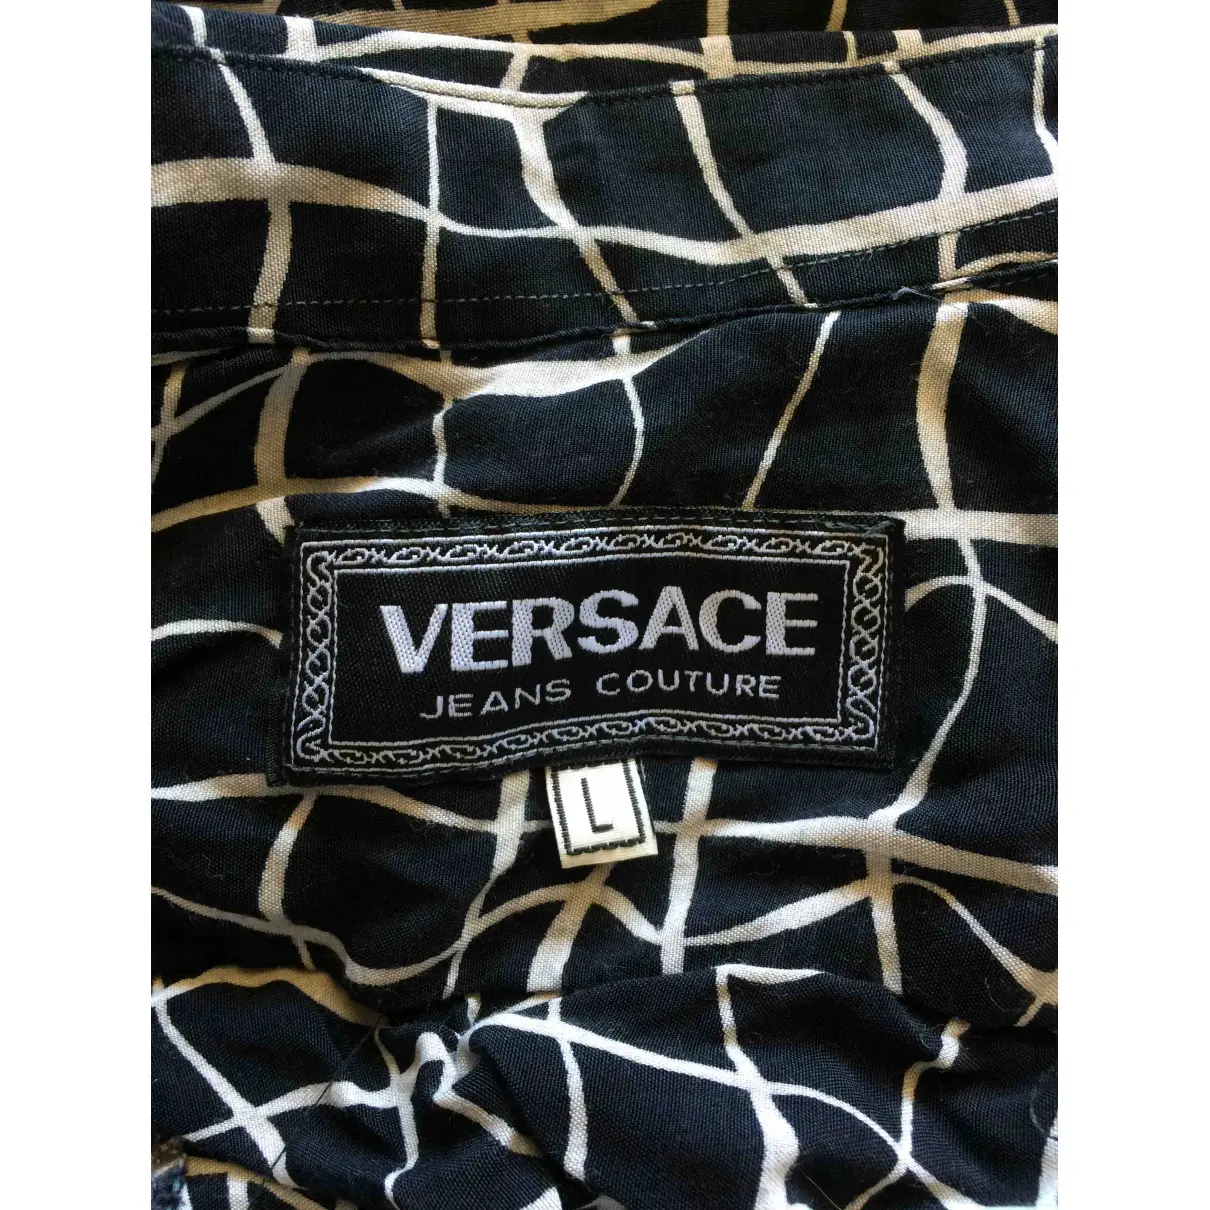 Black Cotton Top Versace - Vintage